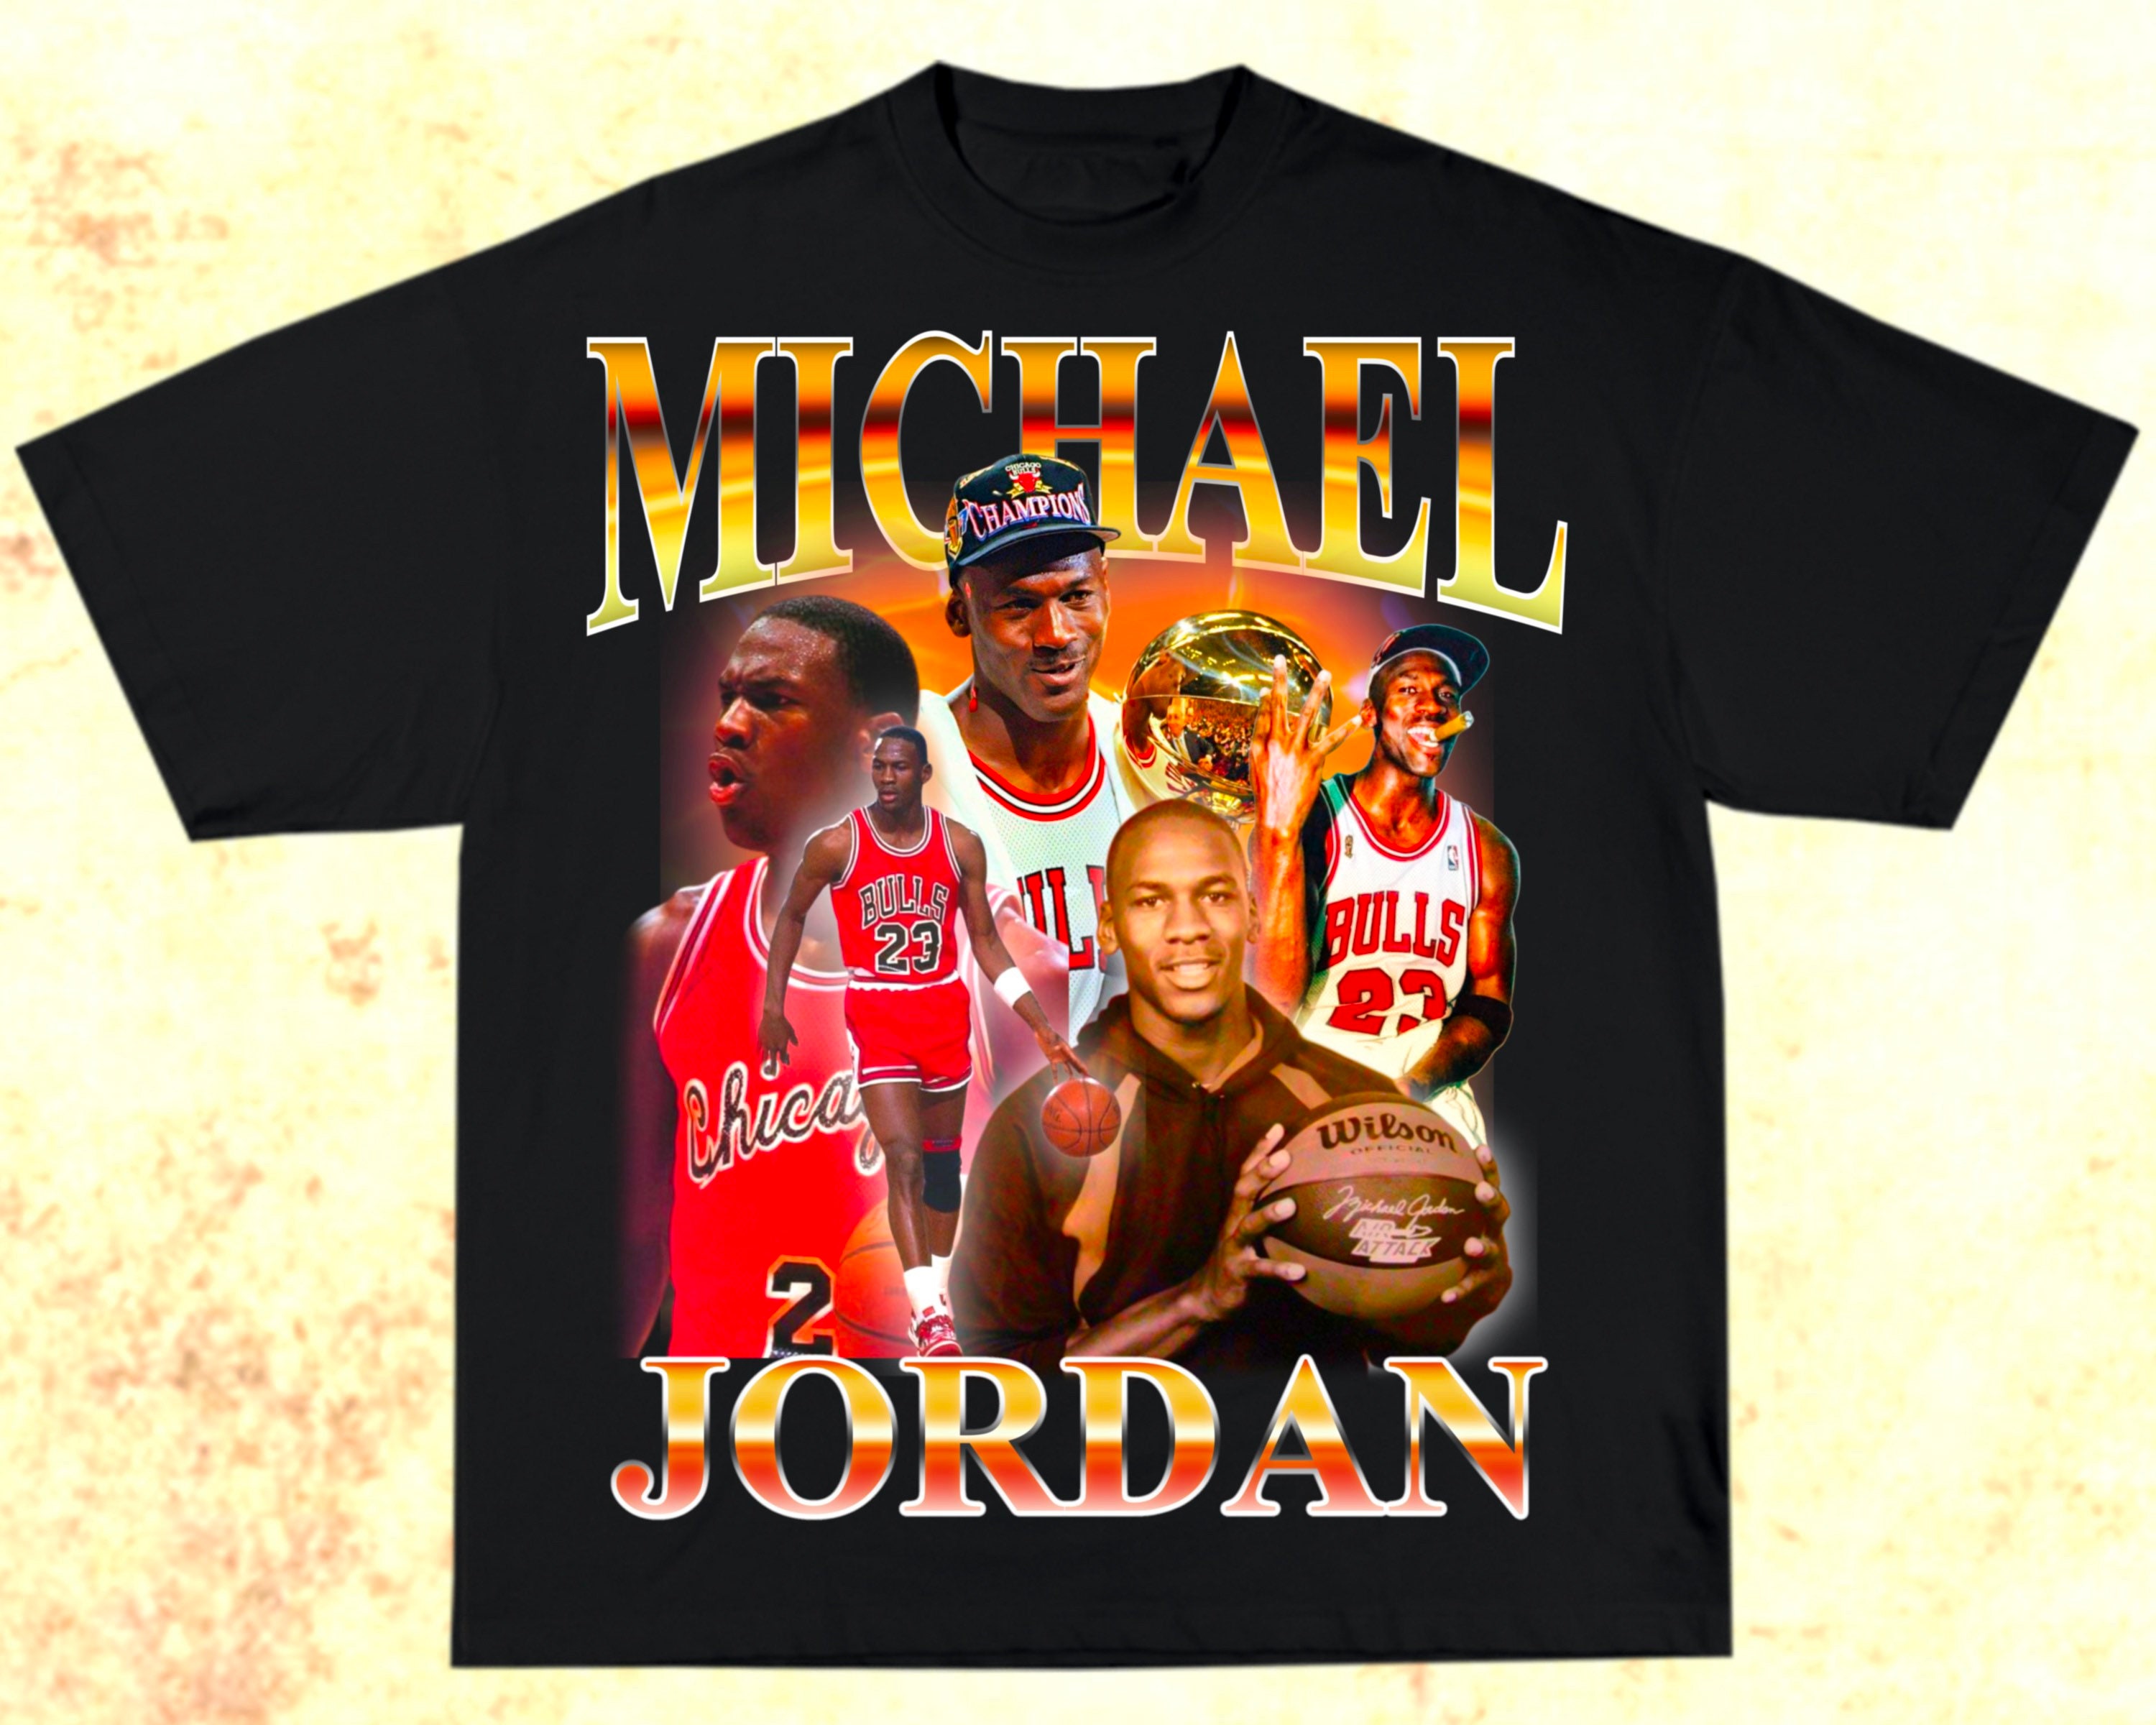 Michael Jordan 90s Bootleg T-shirt Design PNG Clear Background 